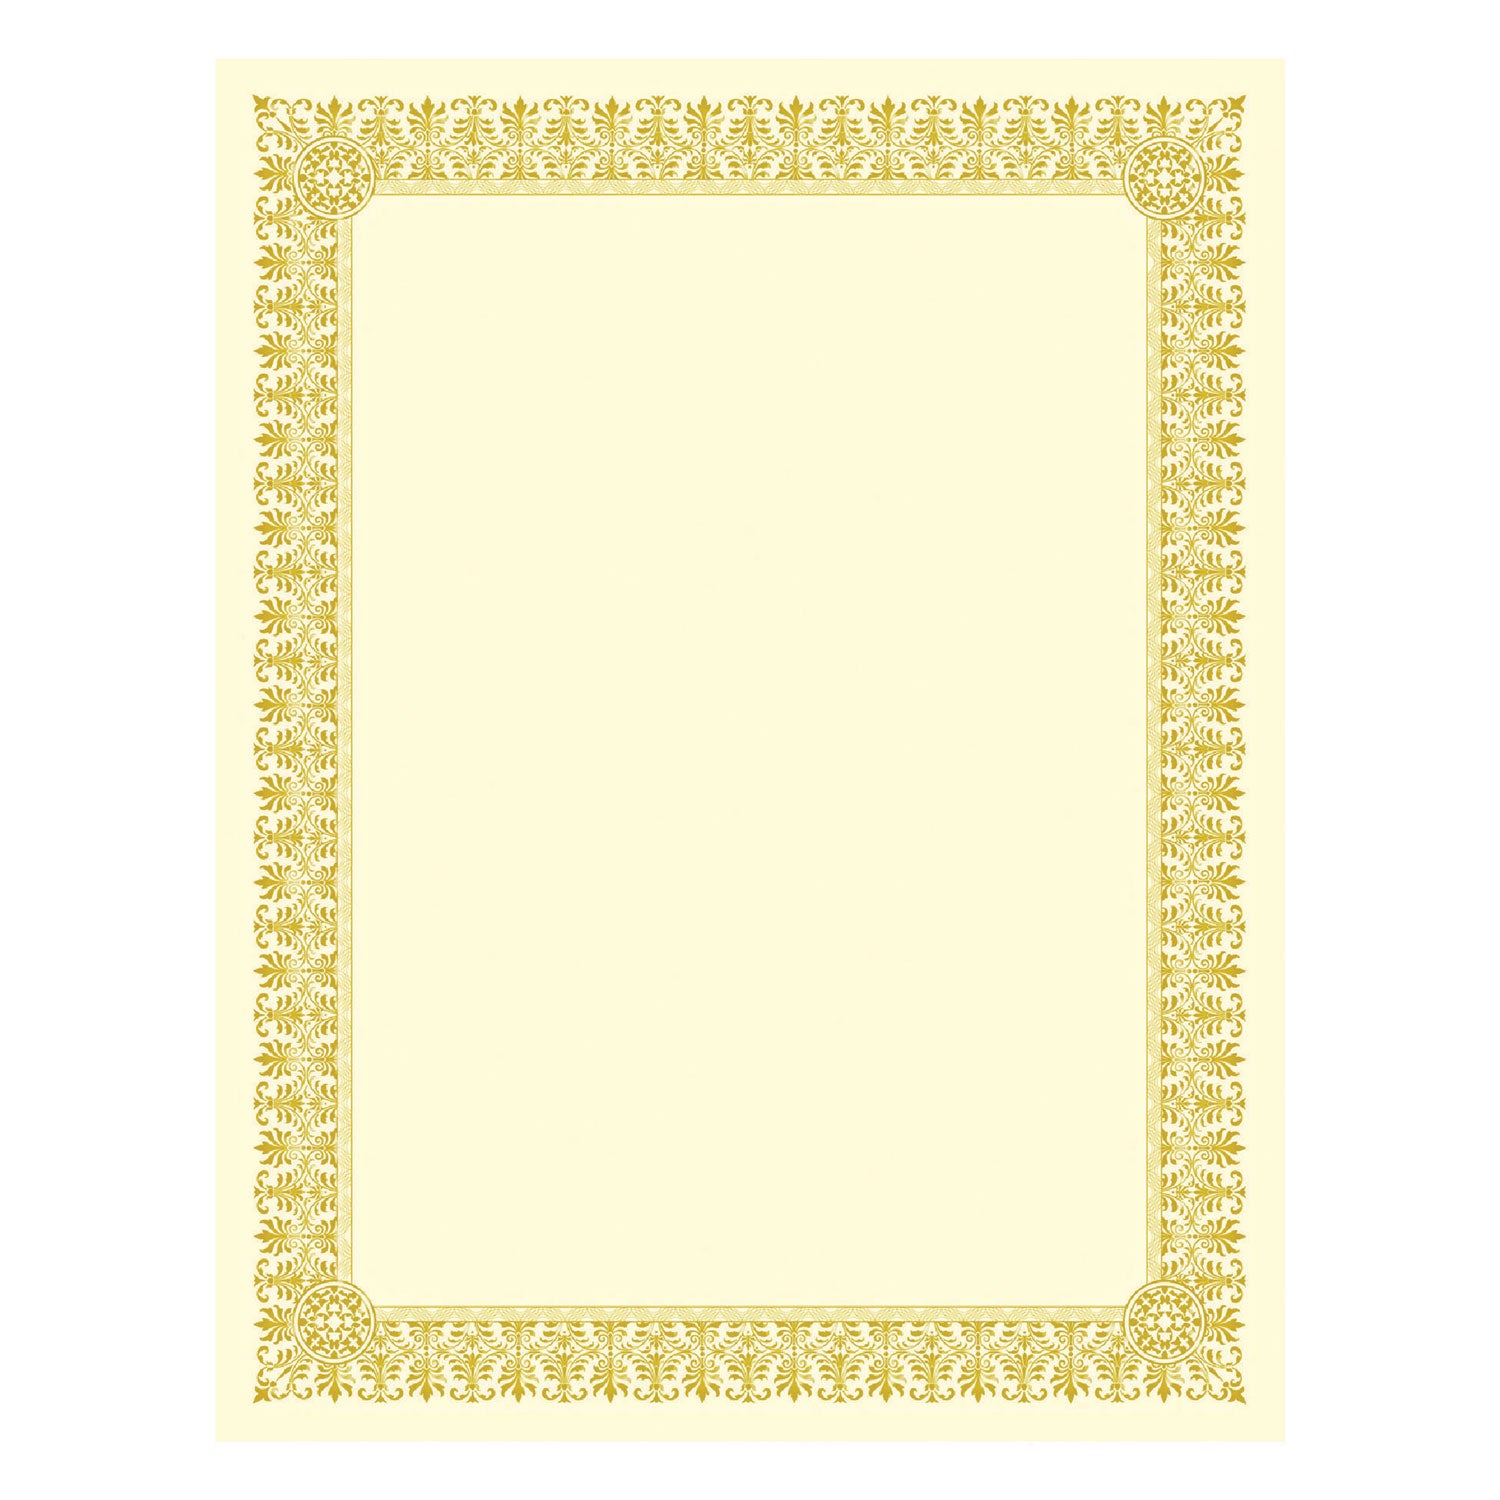 Premium Certificates, 8.5 x 11, Ivory/Gold with Fleur Gold Foil Border, 15/Pack - 